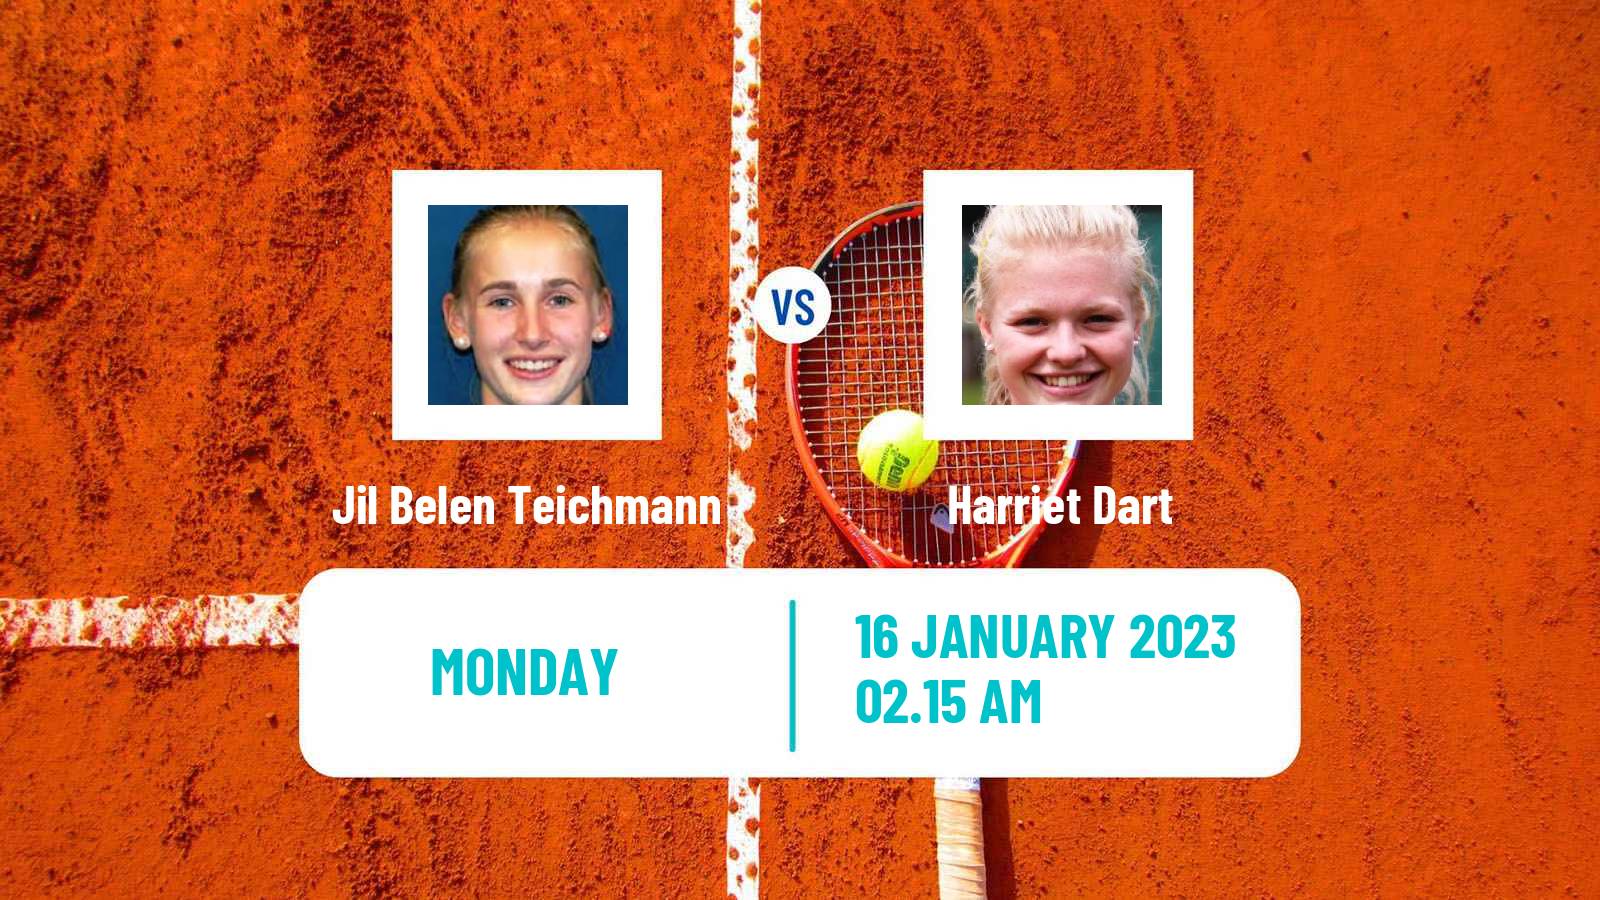 Tennis WTA Australian Open Jil Belen Teichmann - Harriet Dart